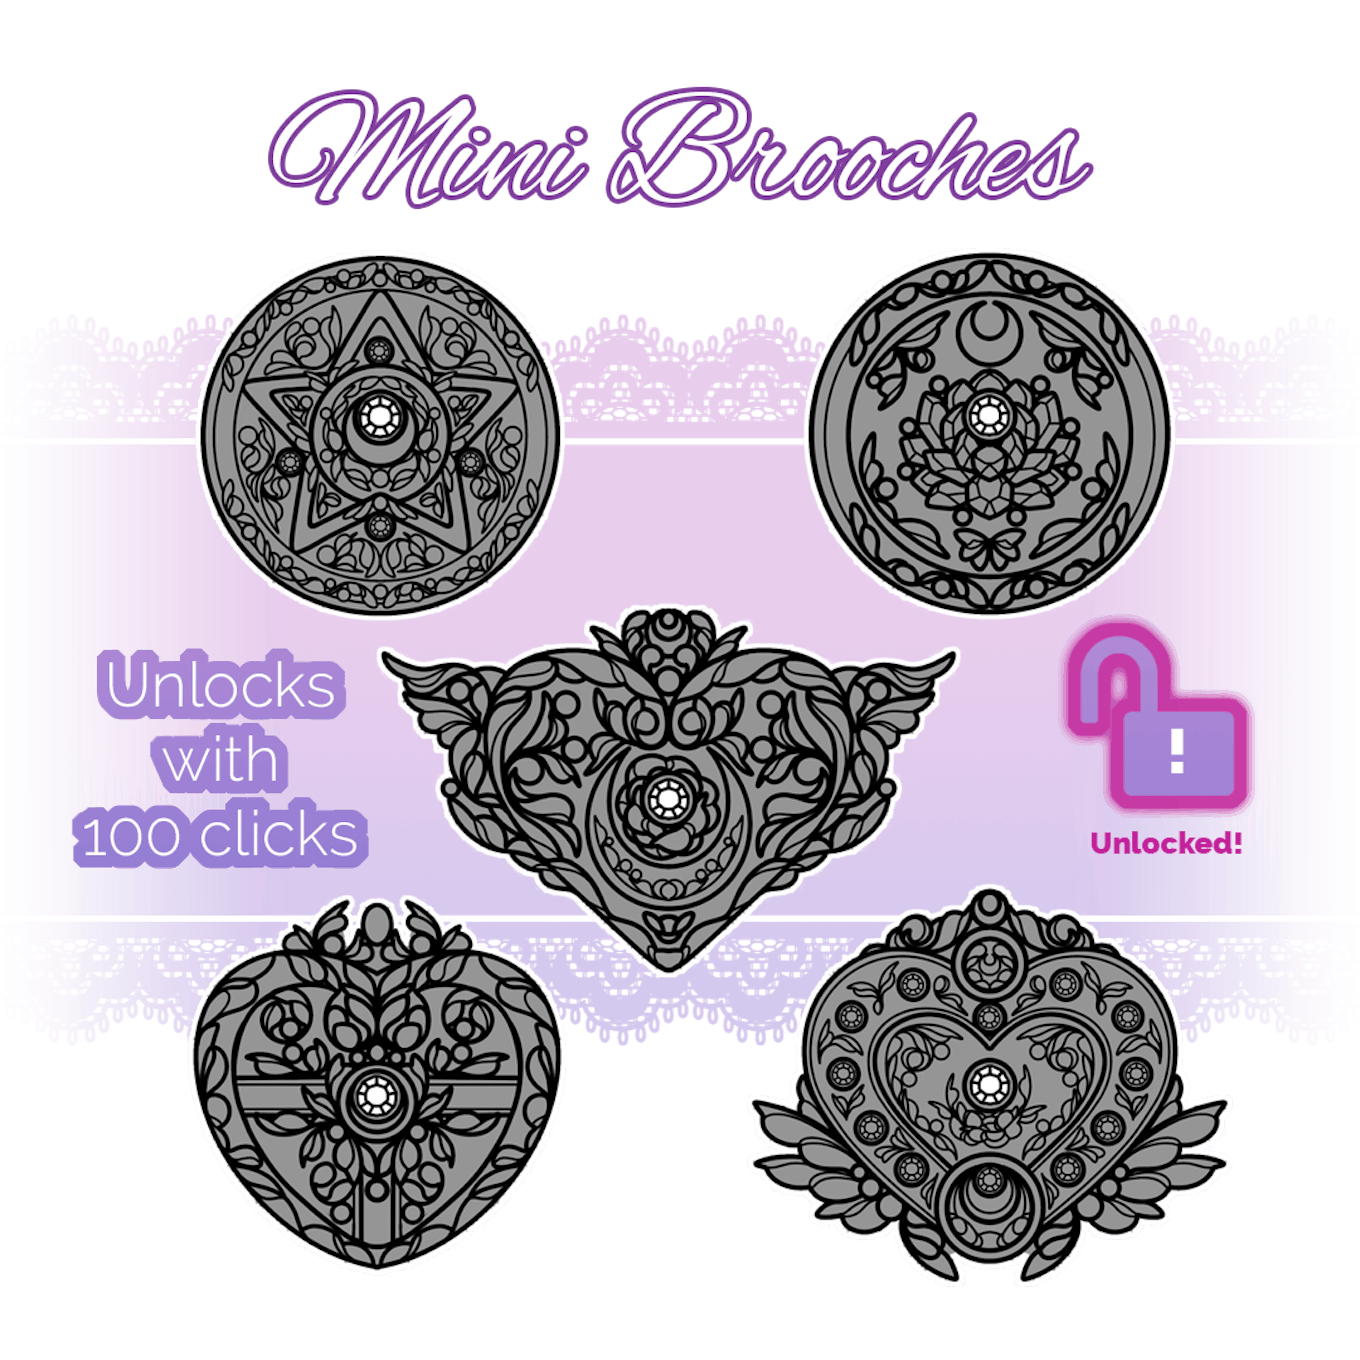 Mini Brooches: Unlocks with 100 clicks. Unlocked!